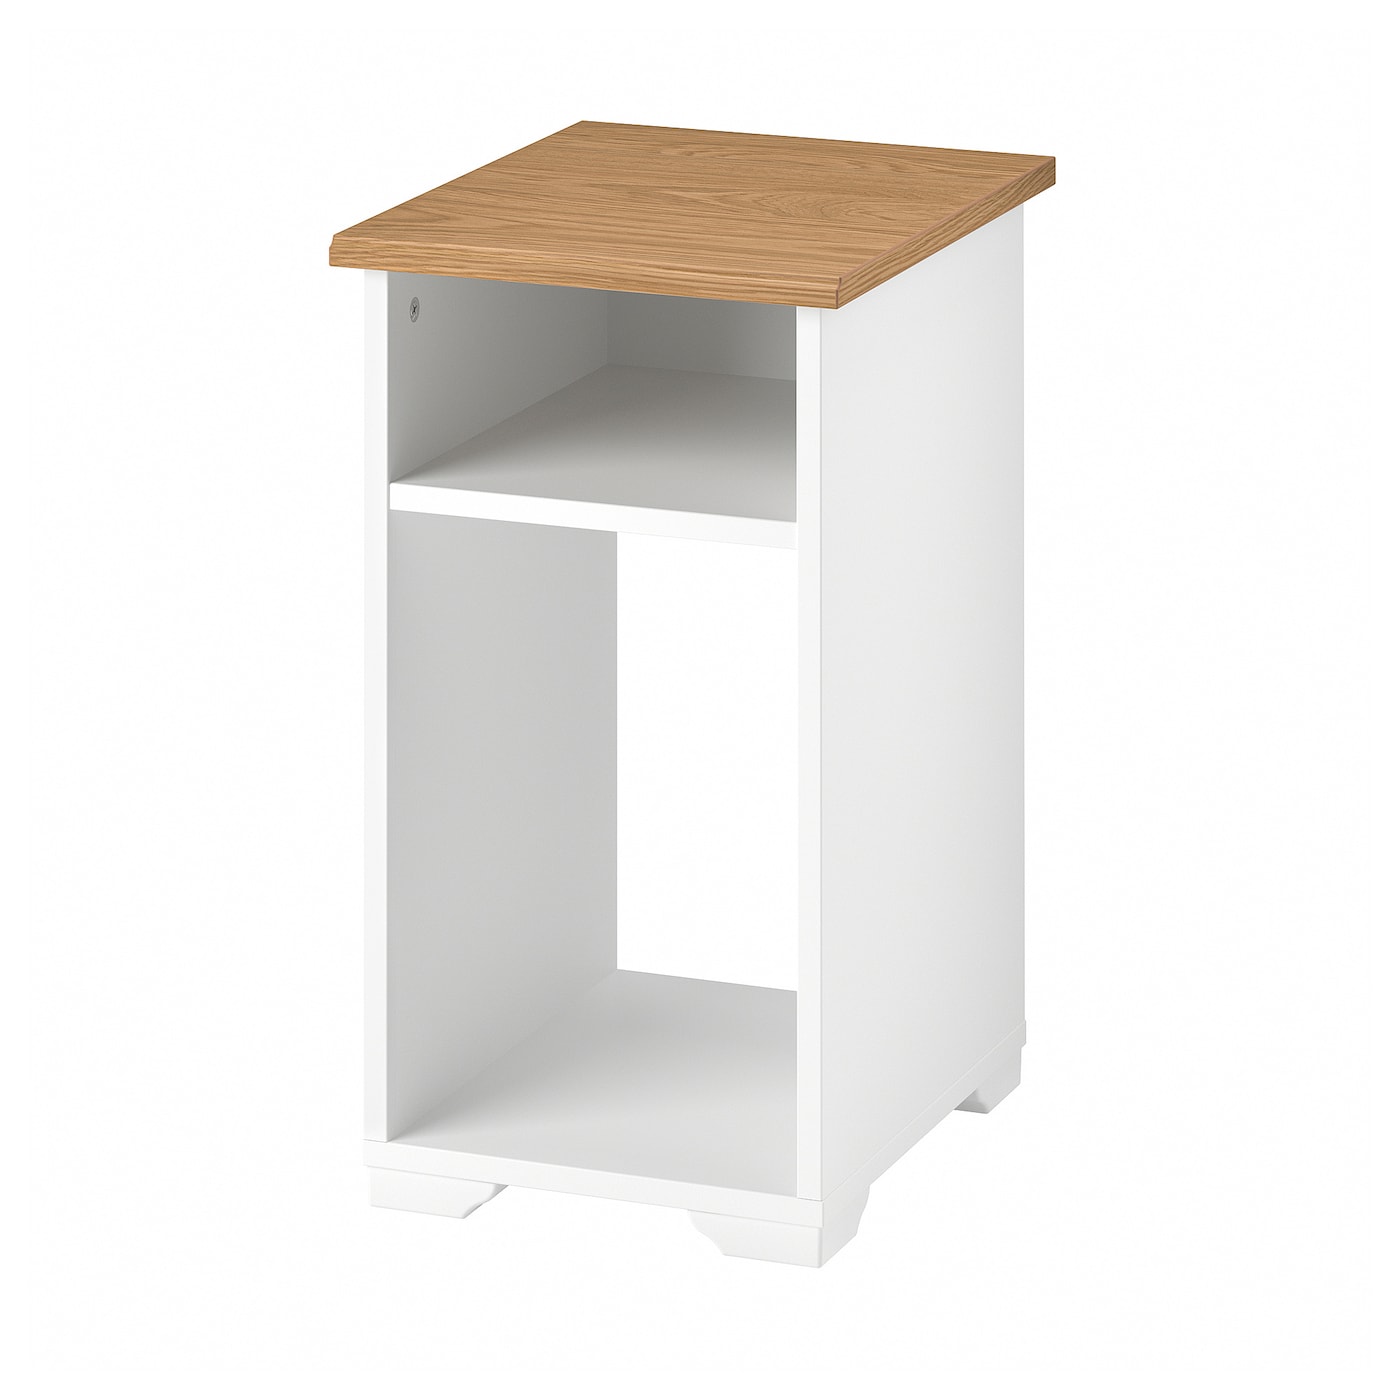 Столик придиванный - IKEA SKRUVBY/ СКРУБВИ ИКЕА, 58х40х32 см, белый/коричневый